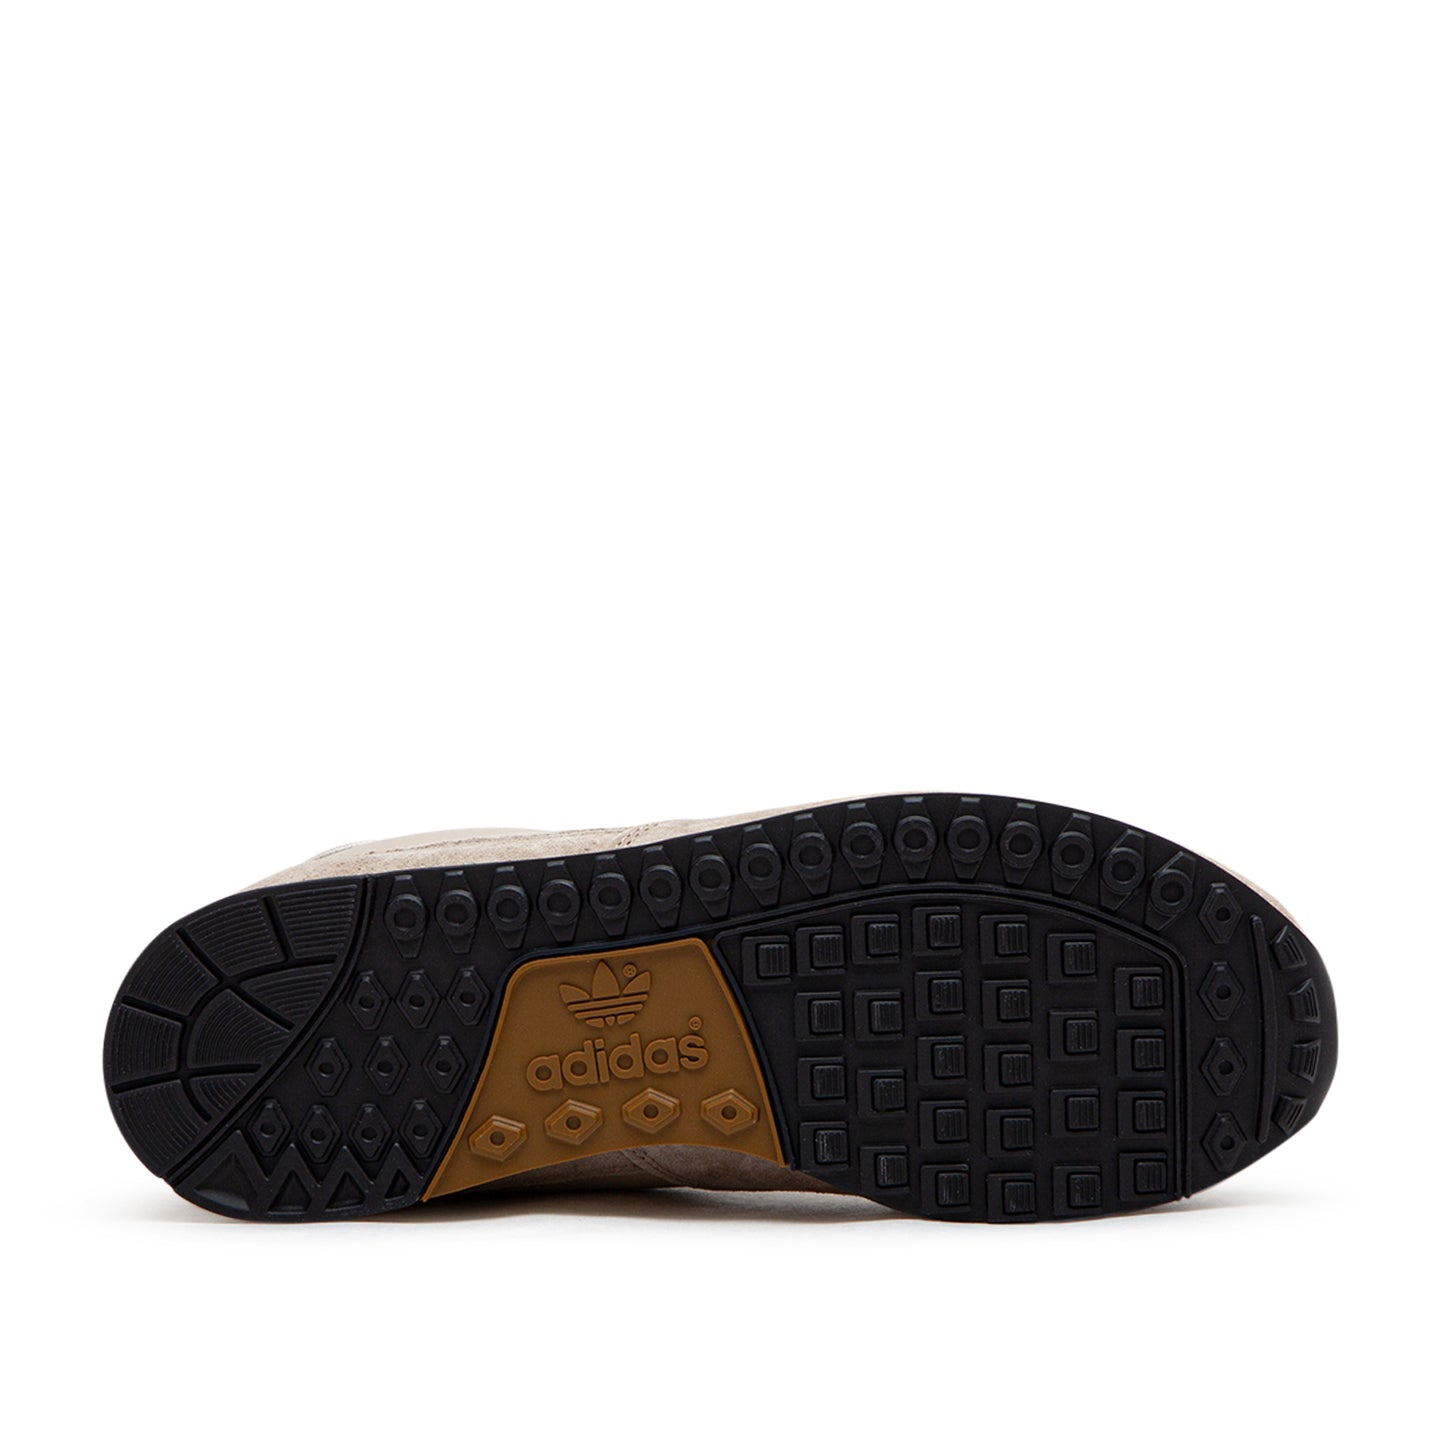 adidas lawkholme spzl (light brown)